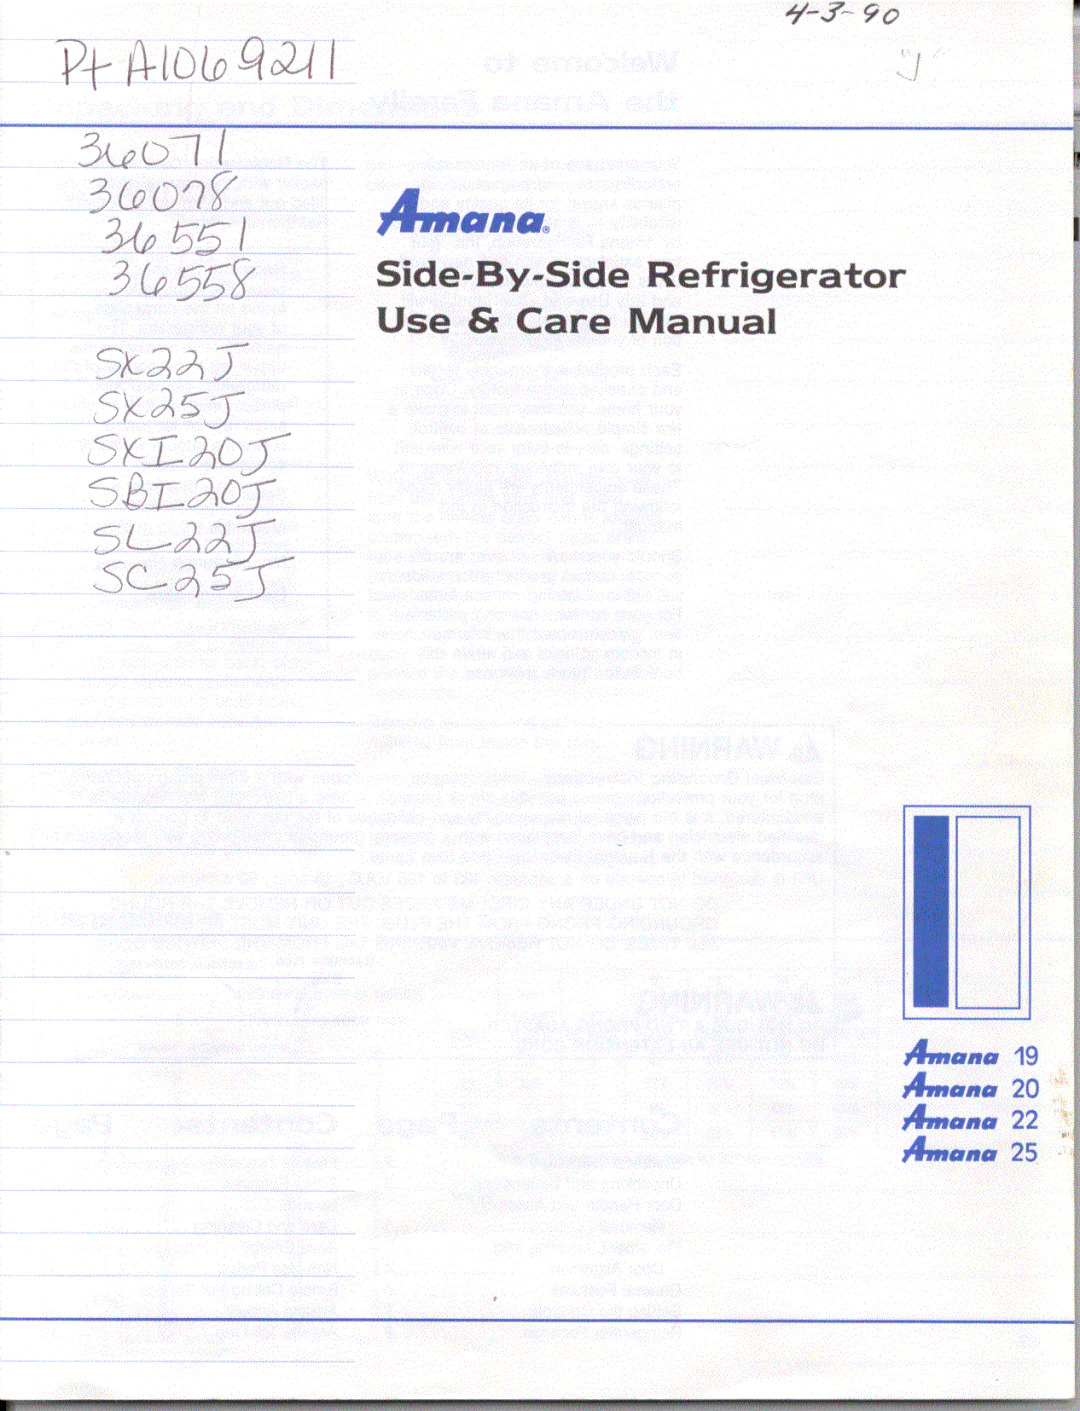 Amana Amana 19, Amana 20, Amana 22, Amana 25, Side-By-Side Refridgerator manual 